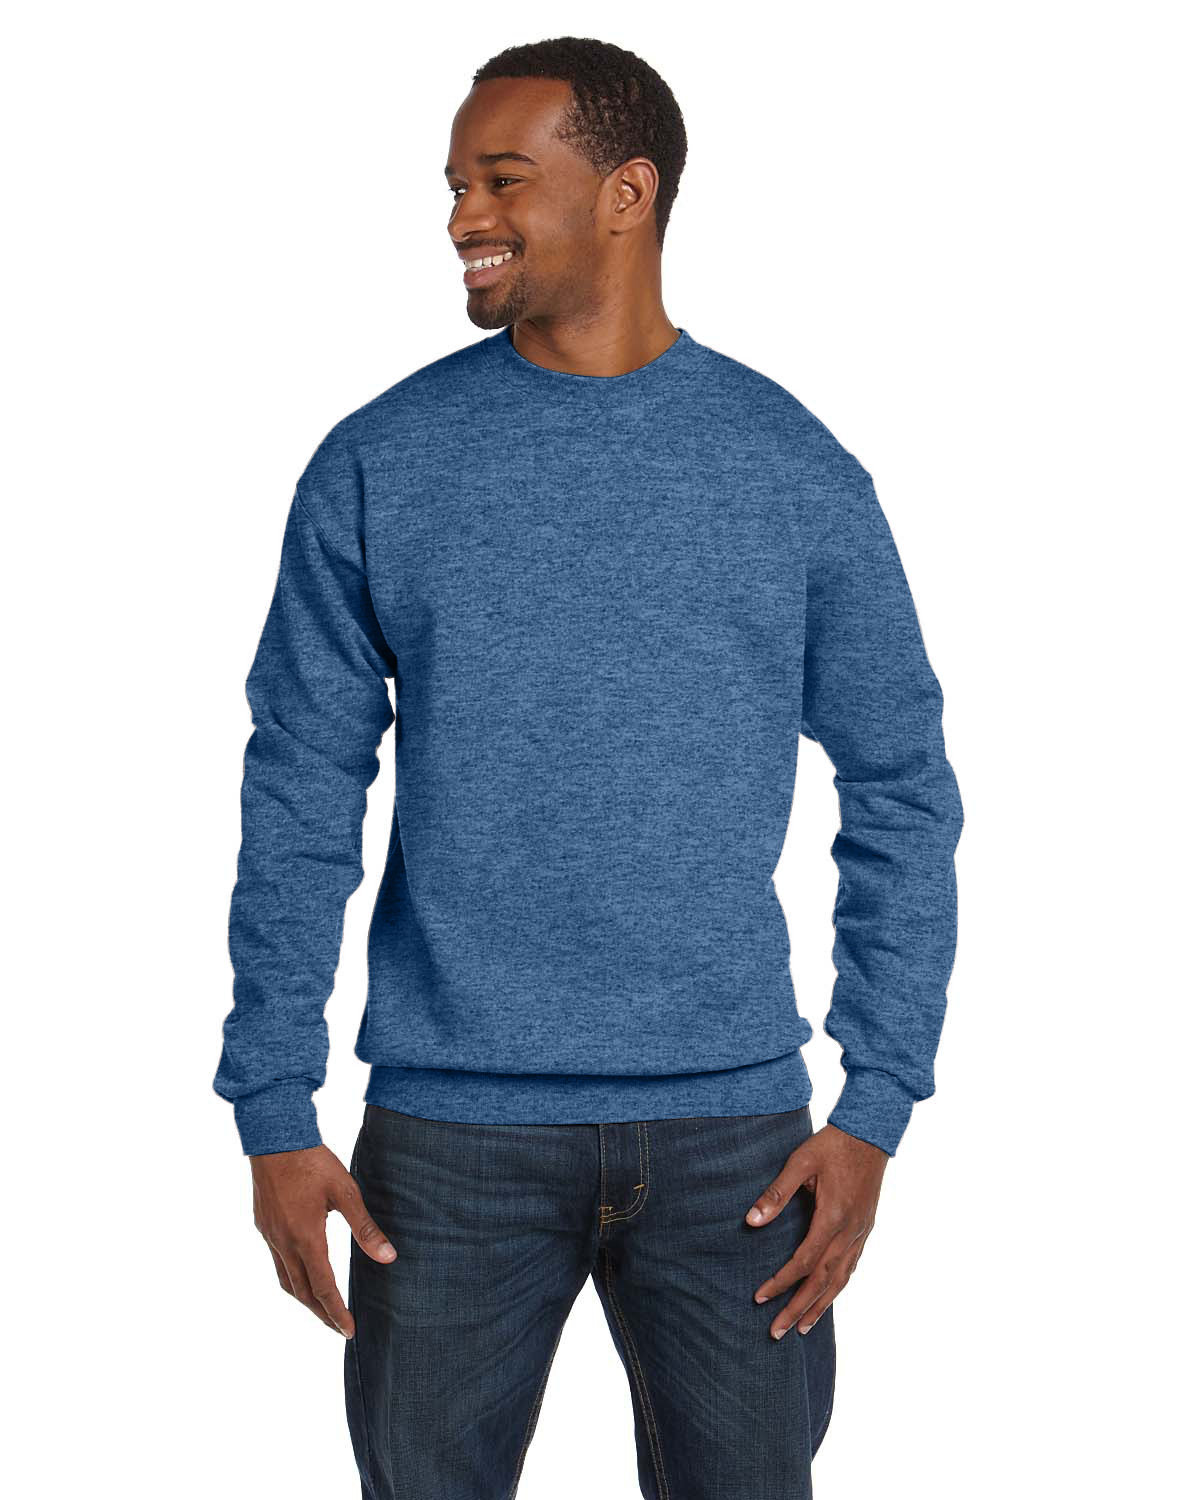 https://images.shirtspace.com/fullsize/WzeT%2Bk7LouS9frSXuLDw4g%3D%3D/333590/1522-hanes-p1607-ecosmart-crewneck-sweatshirt-front-heather-blue.jpg